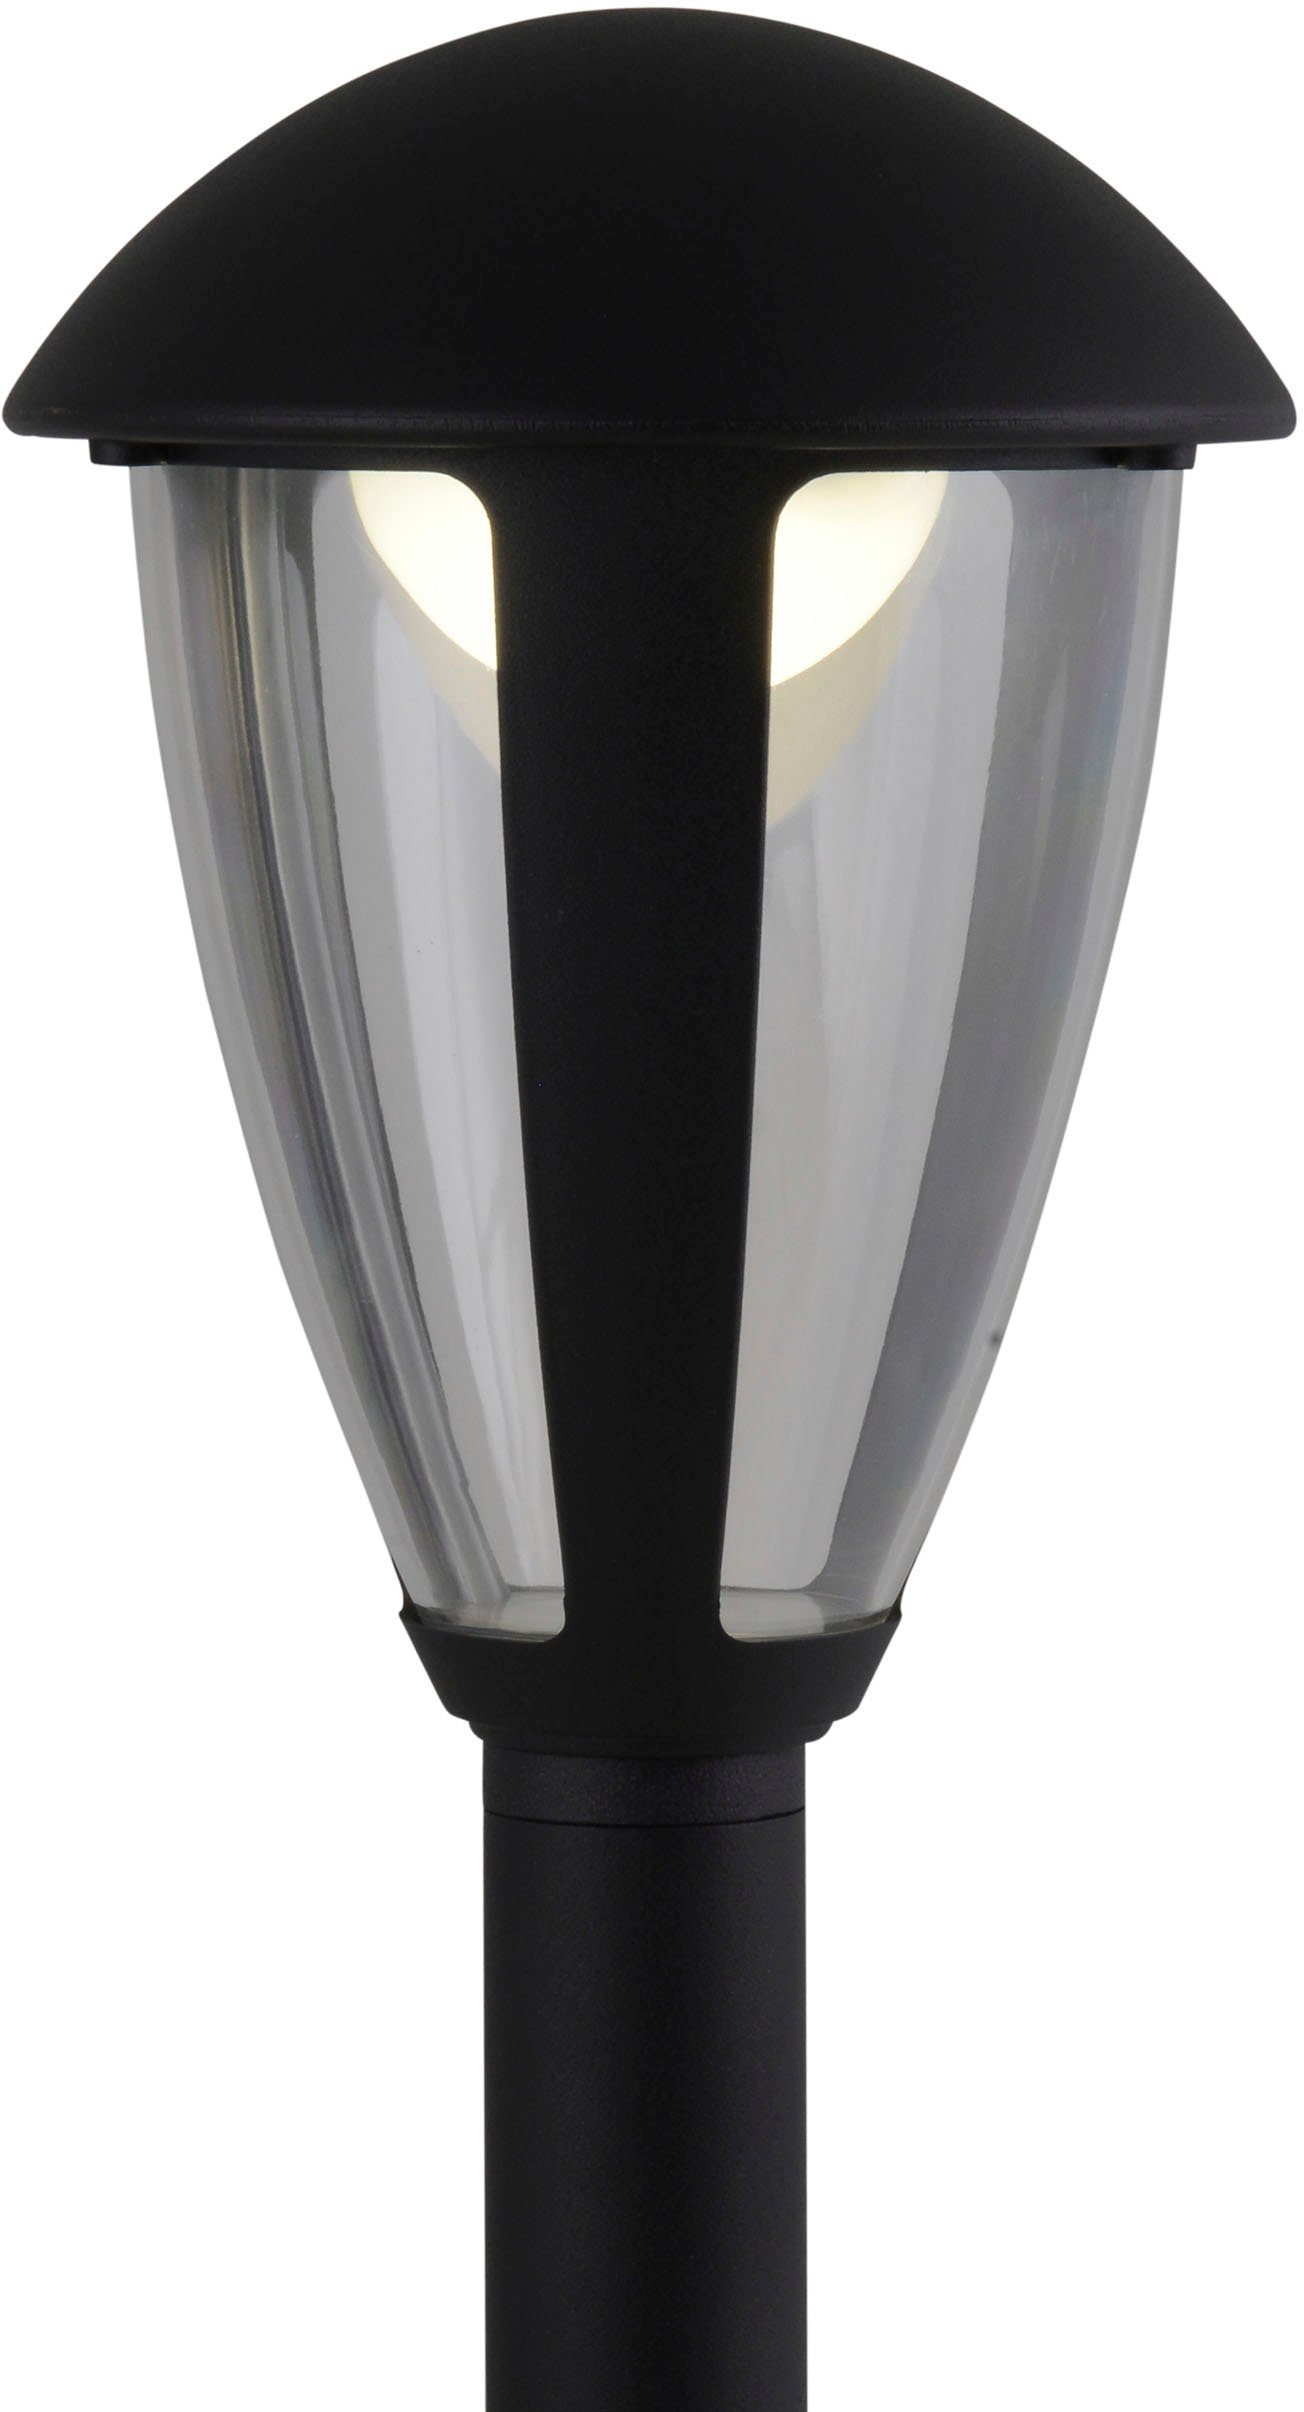 14x Clint, incl. Warmweiß, LED schwarz Höhe klar näve IP44 LED Aluminium Kunststoff Außen-Stehlampe 100cm